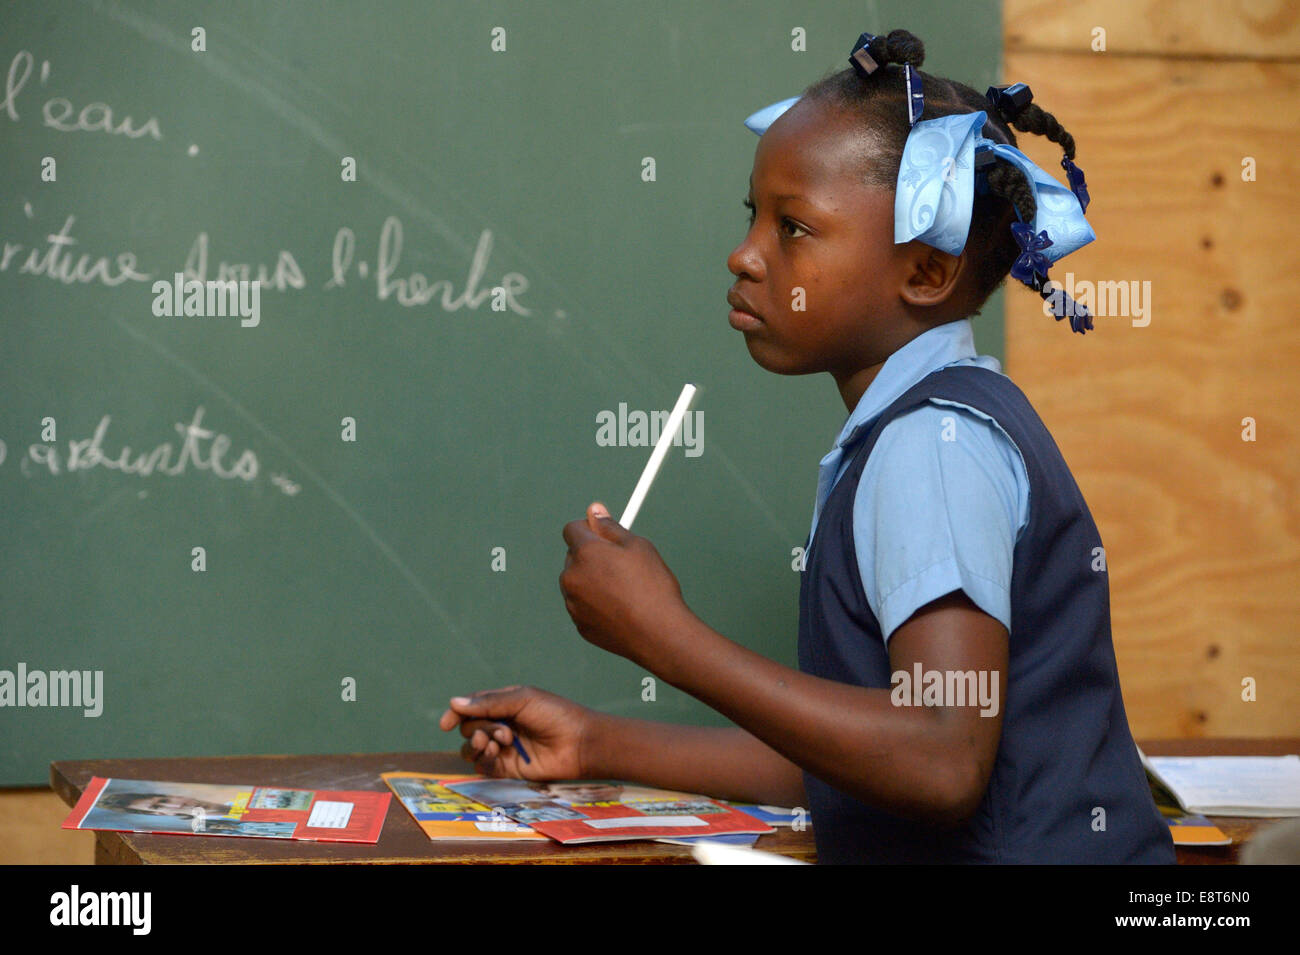 Studente in una scuola per i rifugiati di terremoto, Fort National, Port-au-Prince, Haiti Foto Stock